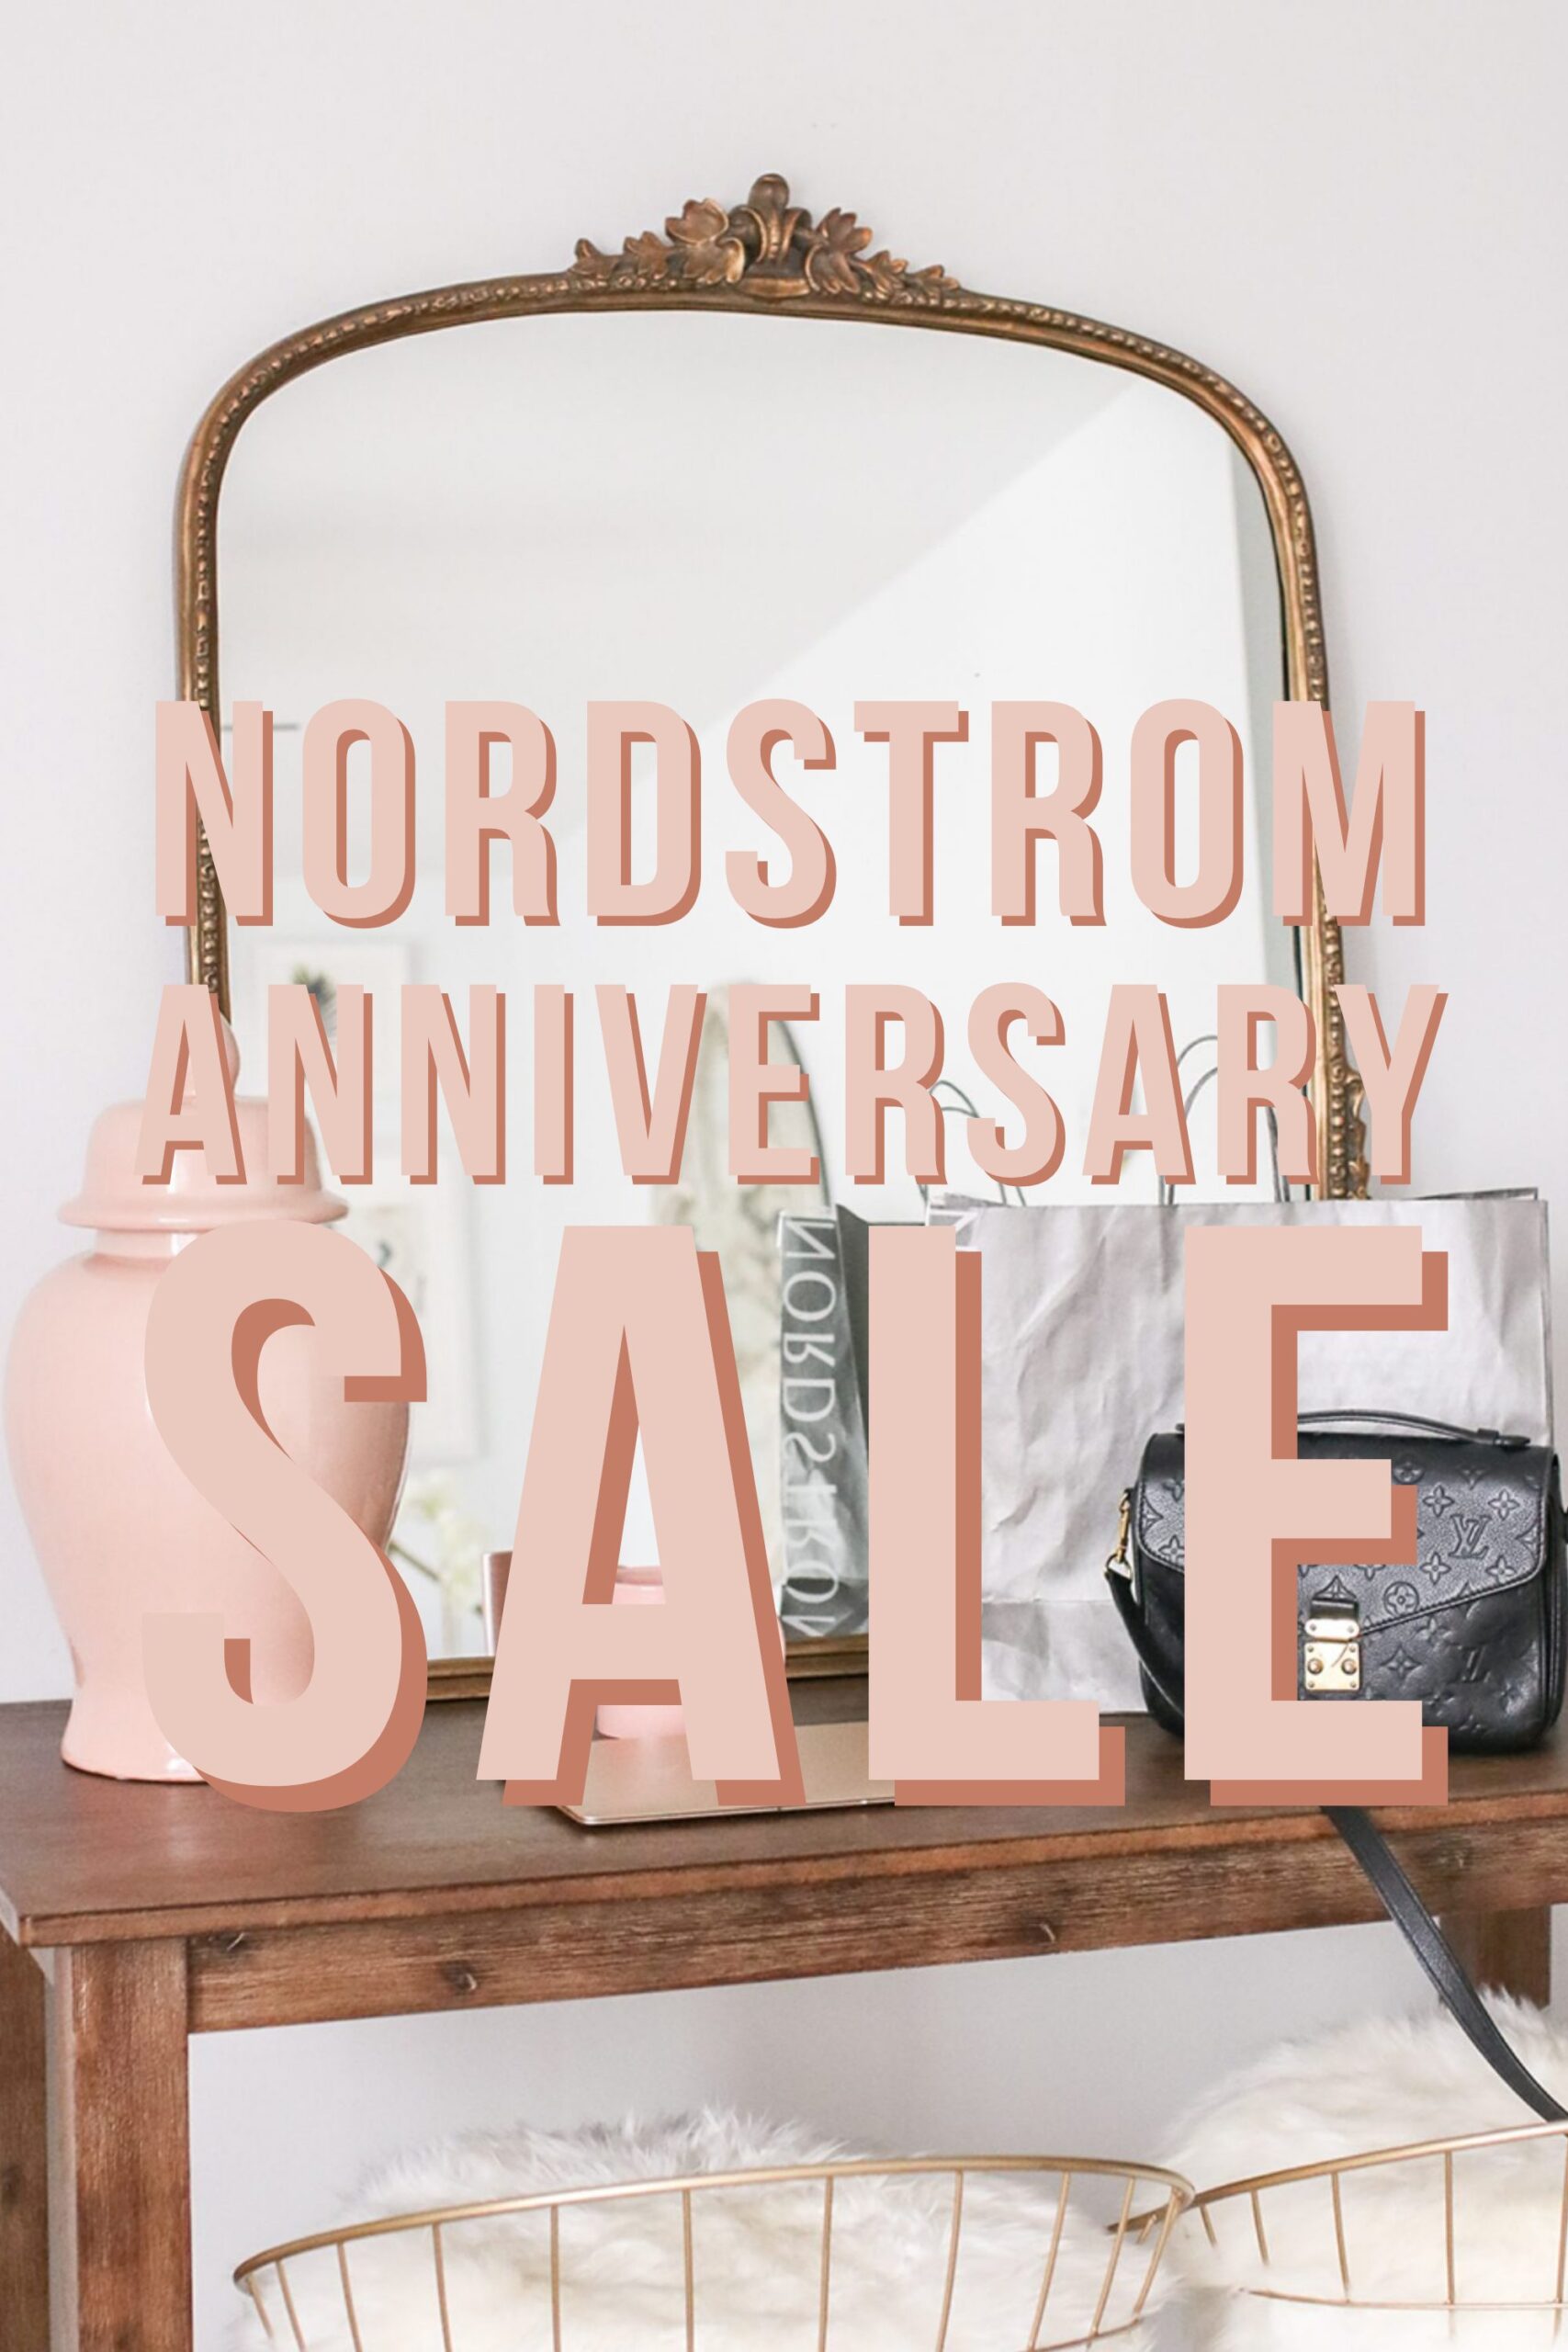 Nordstrom Anniversary Sale 2021, Nordstrom Anniversary Sale Details, Nordstrom Anniversary Sale Dates 2021